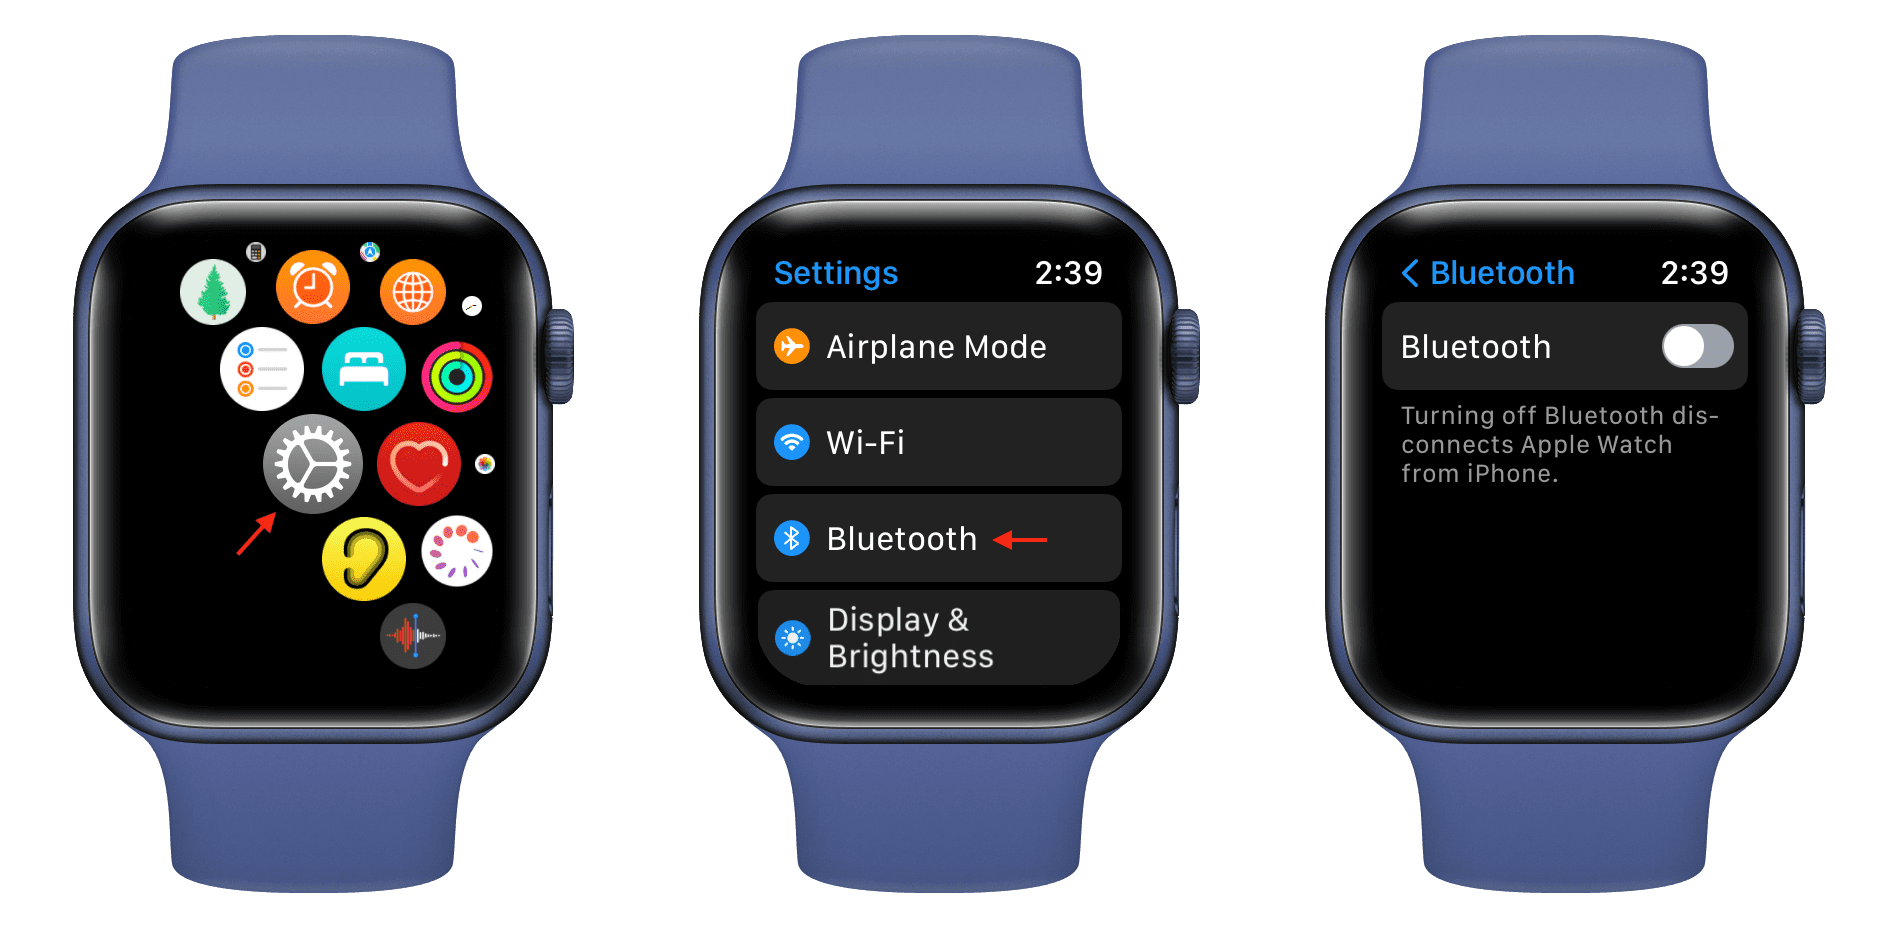 Turn off Bluetooth on Apple Watch